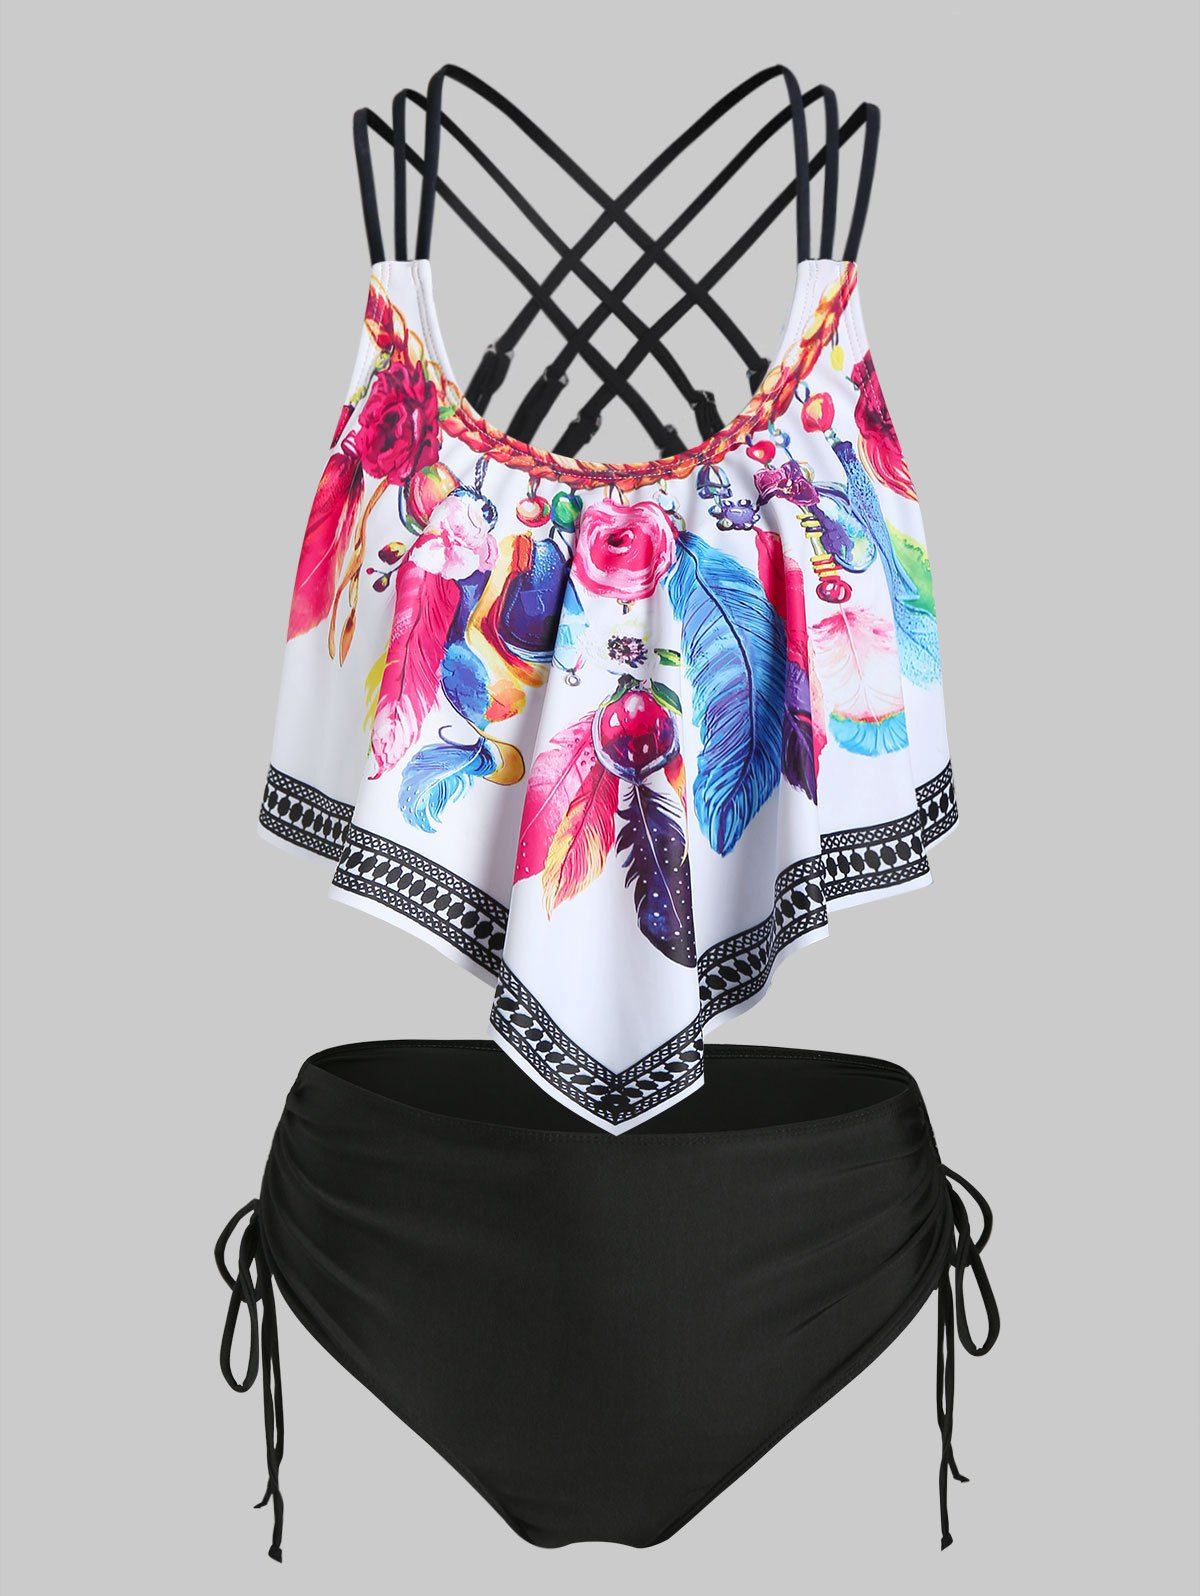 Bohemian Feather Print Swimwear Strappy Criss Cross Cinched Tankini Swimsuit - BLACK XXXL